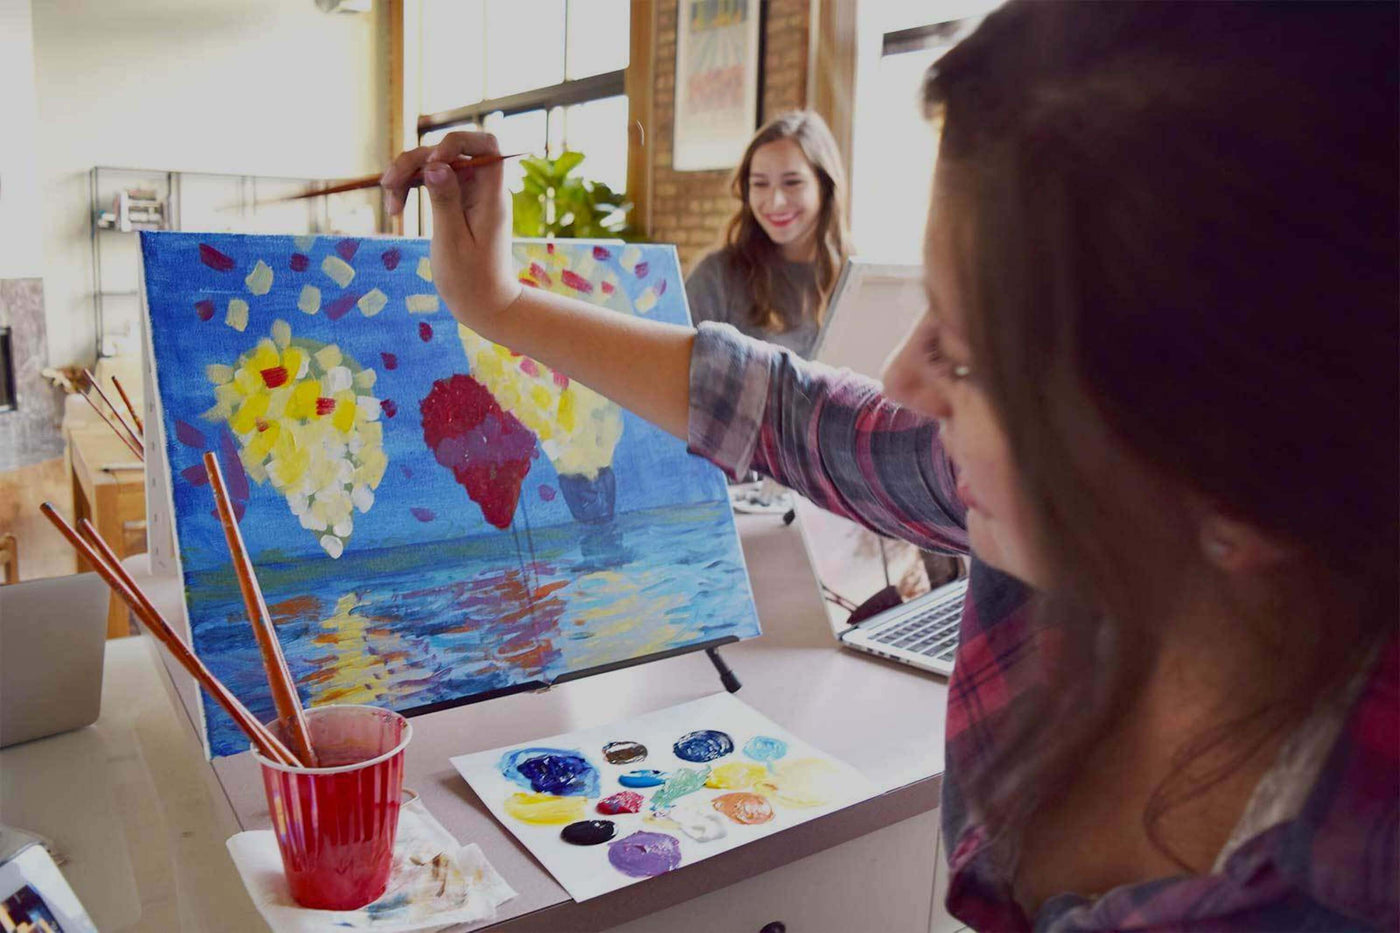 DIY Mini Canvas Art Kits for Kids - Inspiration Made Simple